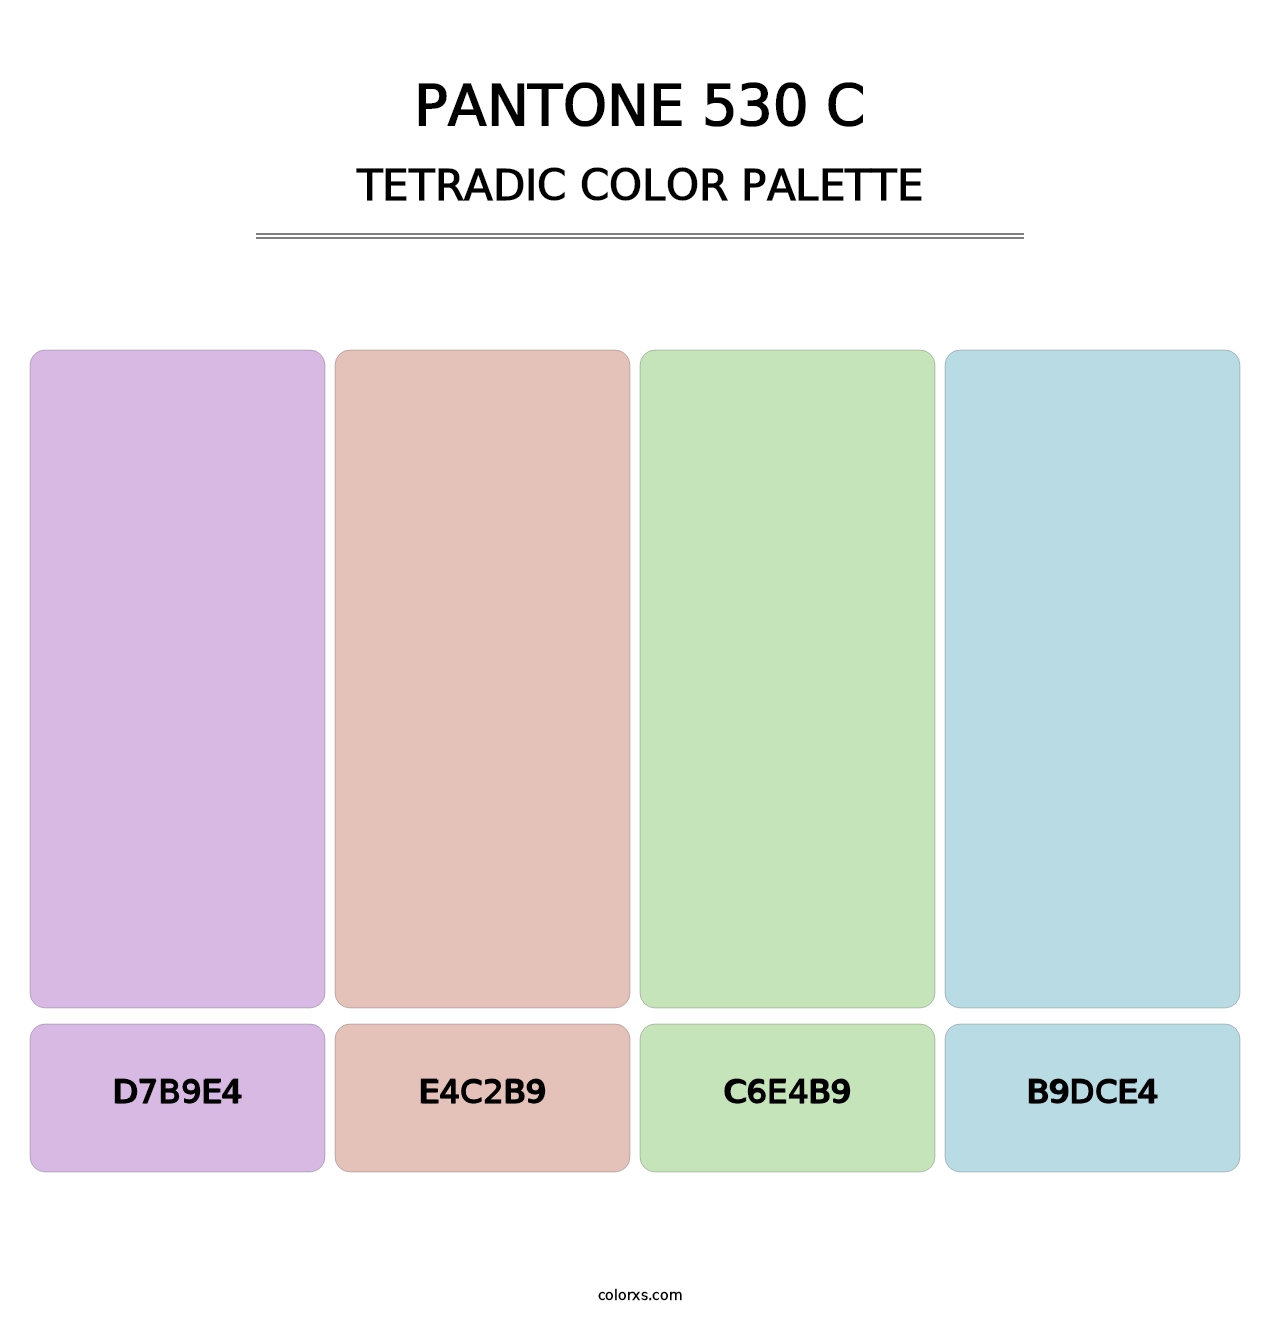 PANTONE 530 C - Tetradic Color Palette